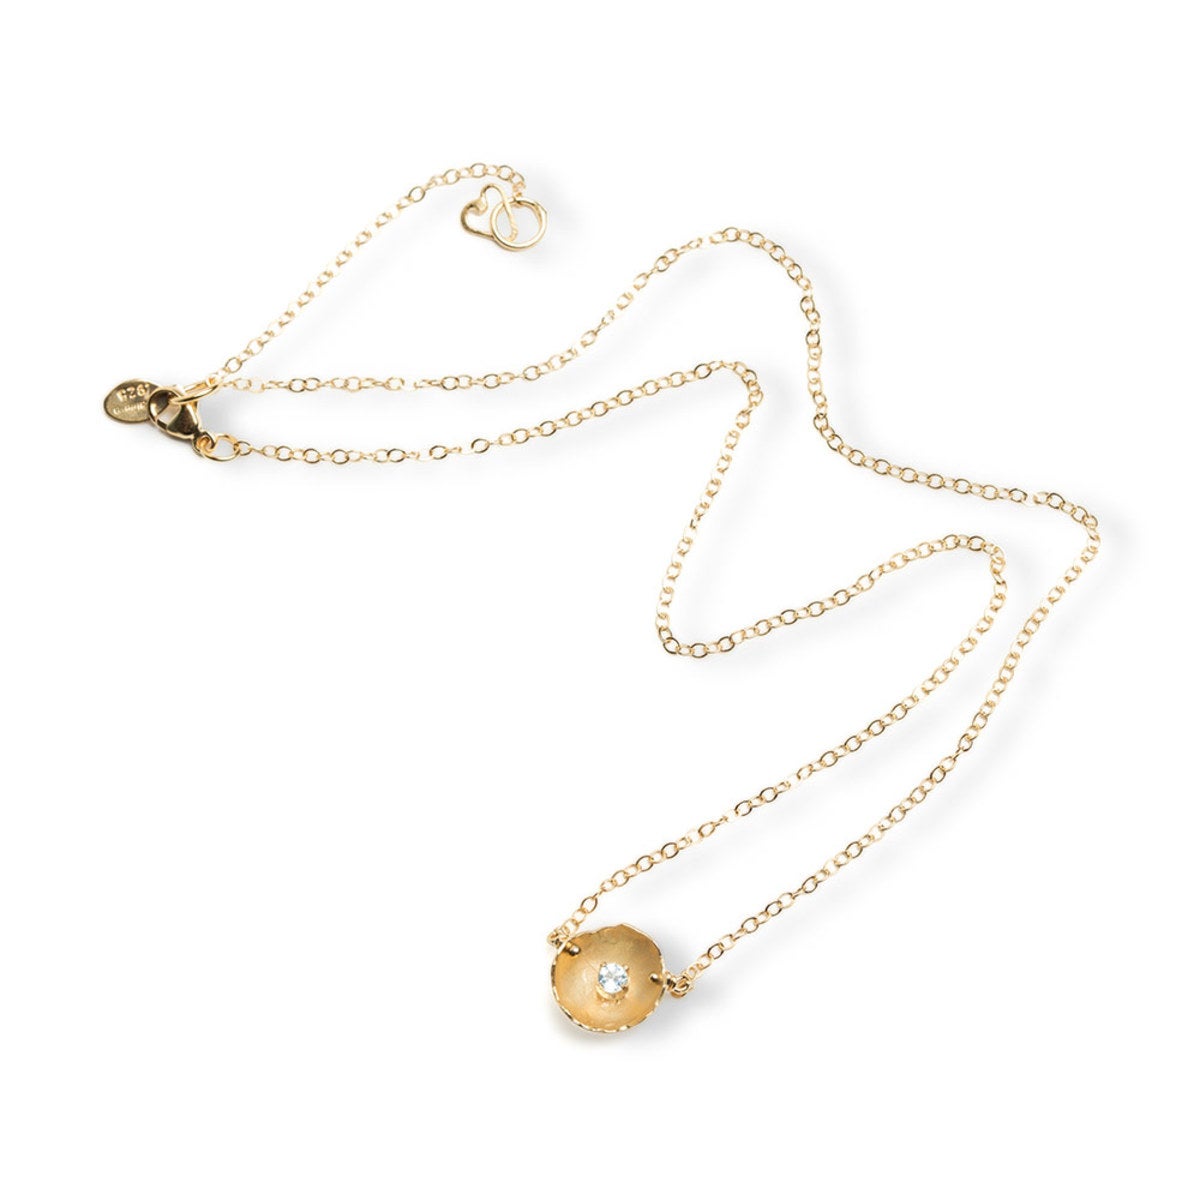 Handmade Eggshell Pendant Necklace in Gold